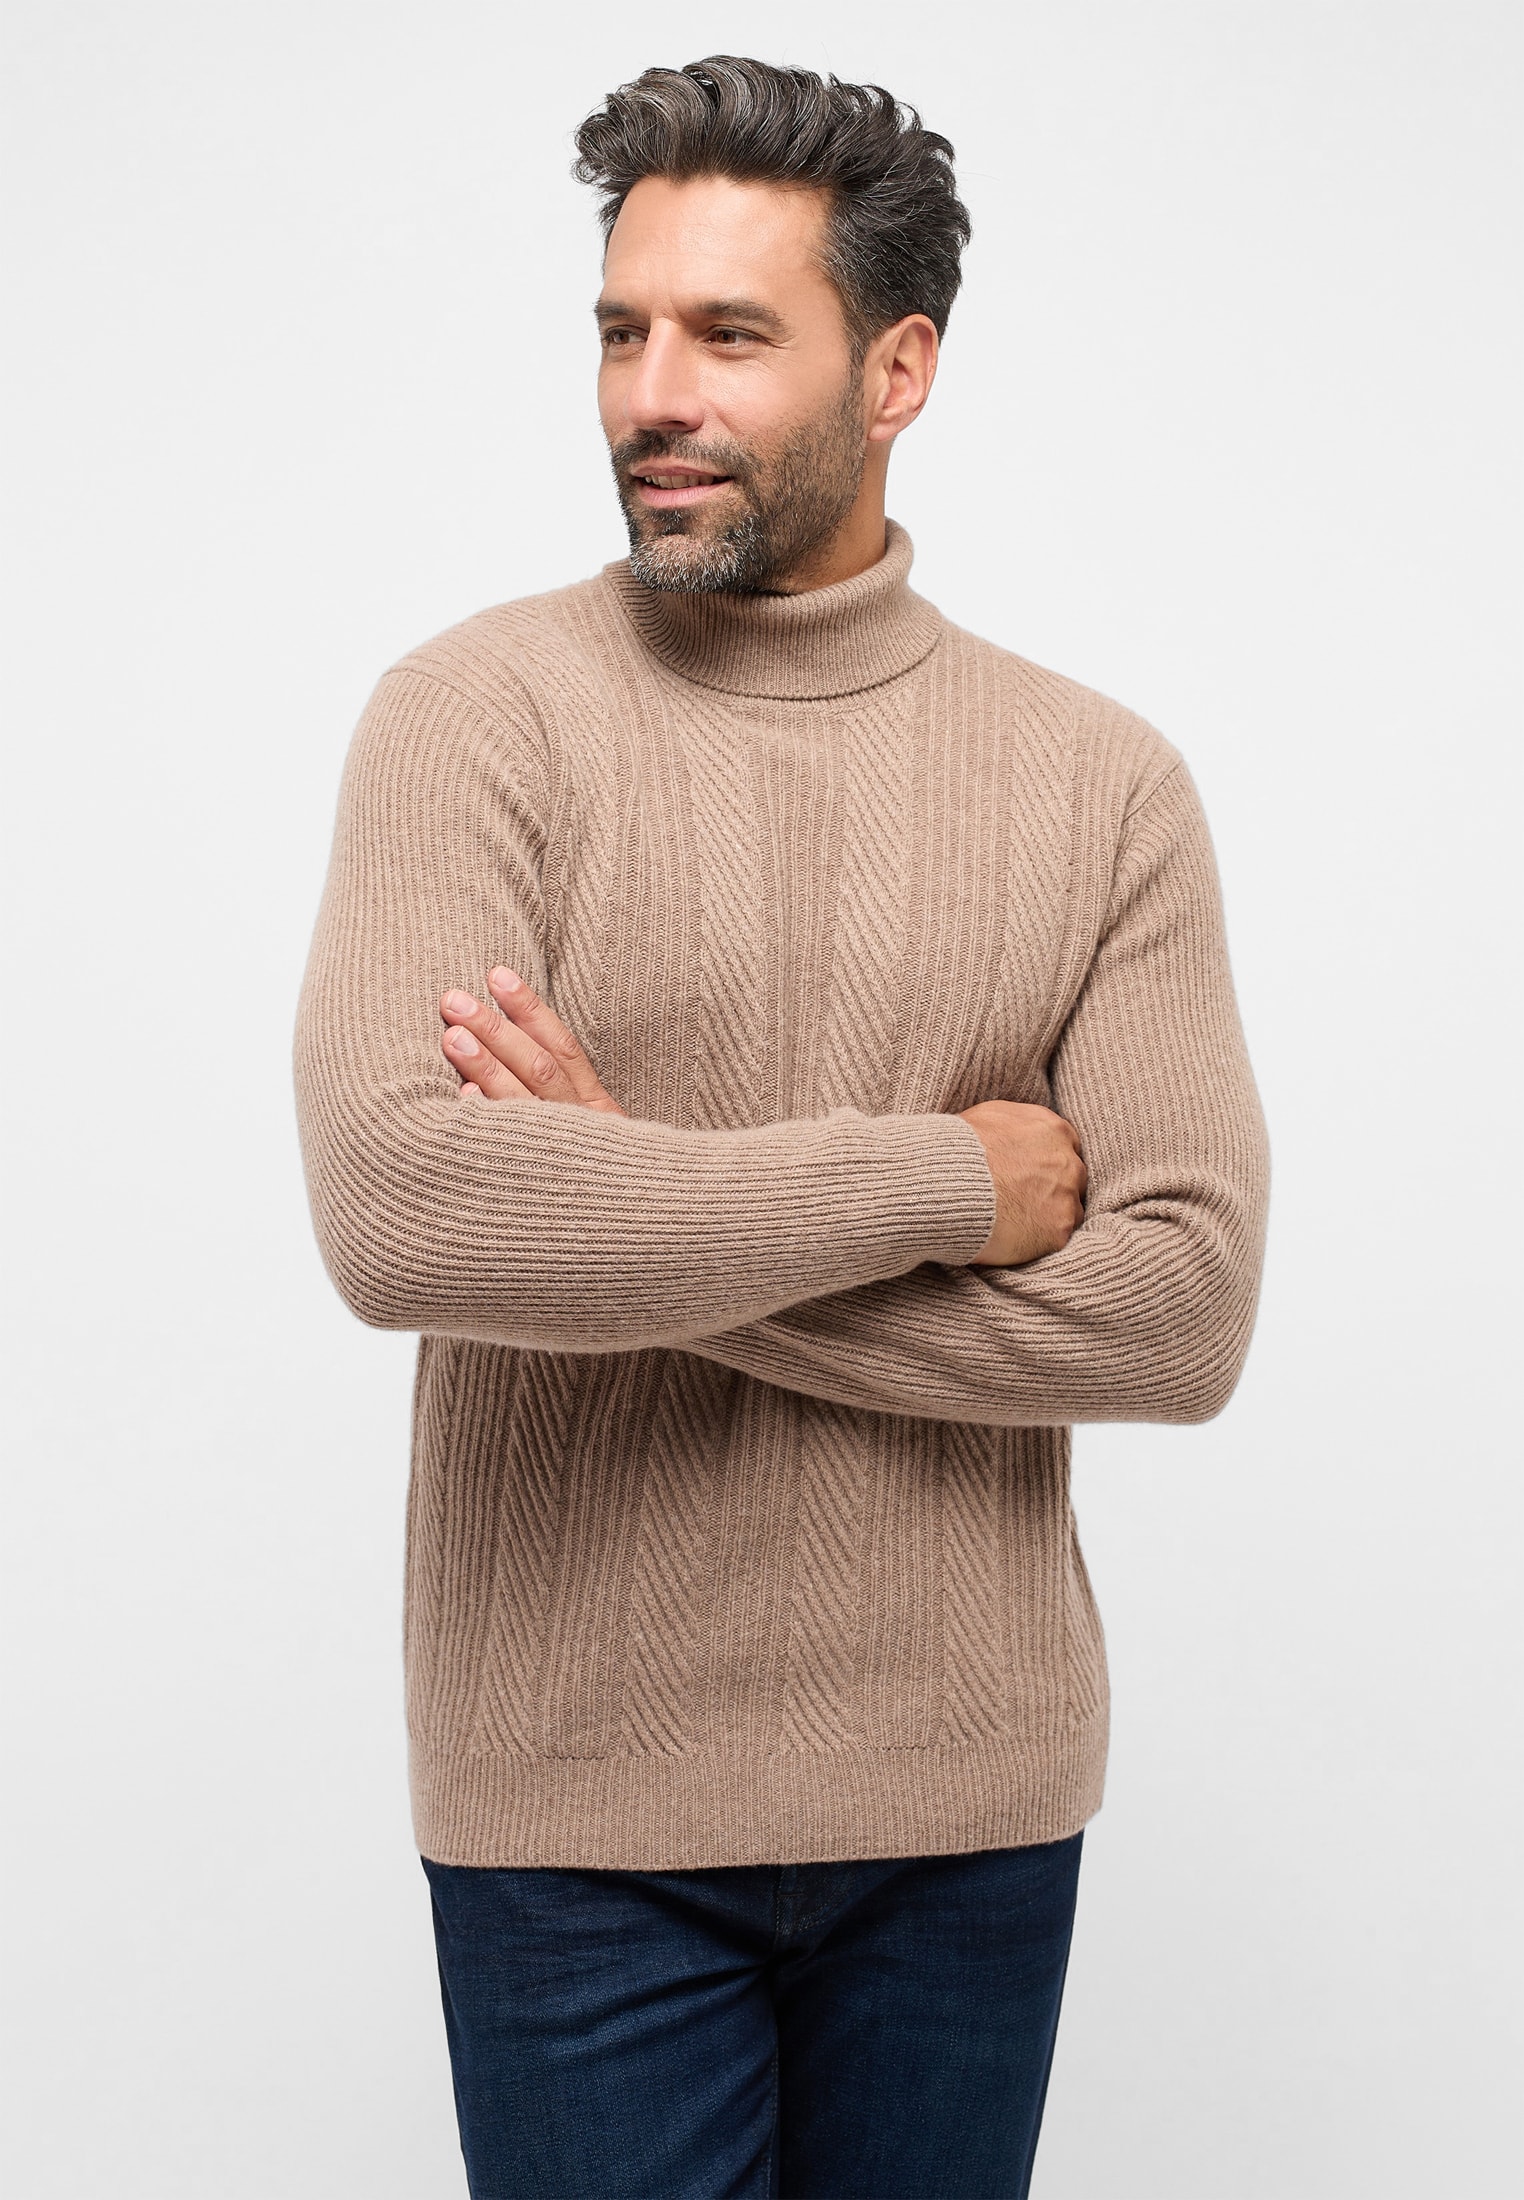 Knitted jumper in beige plain